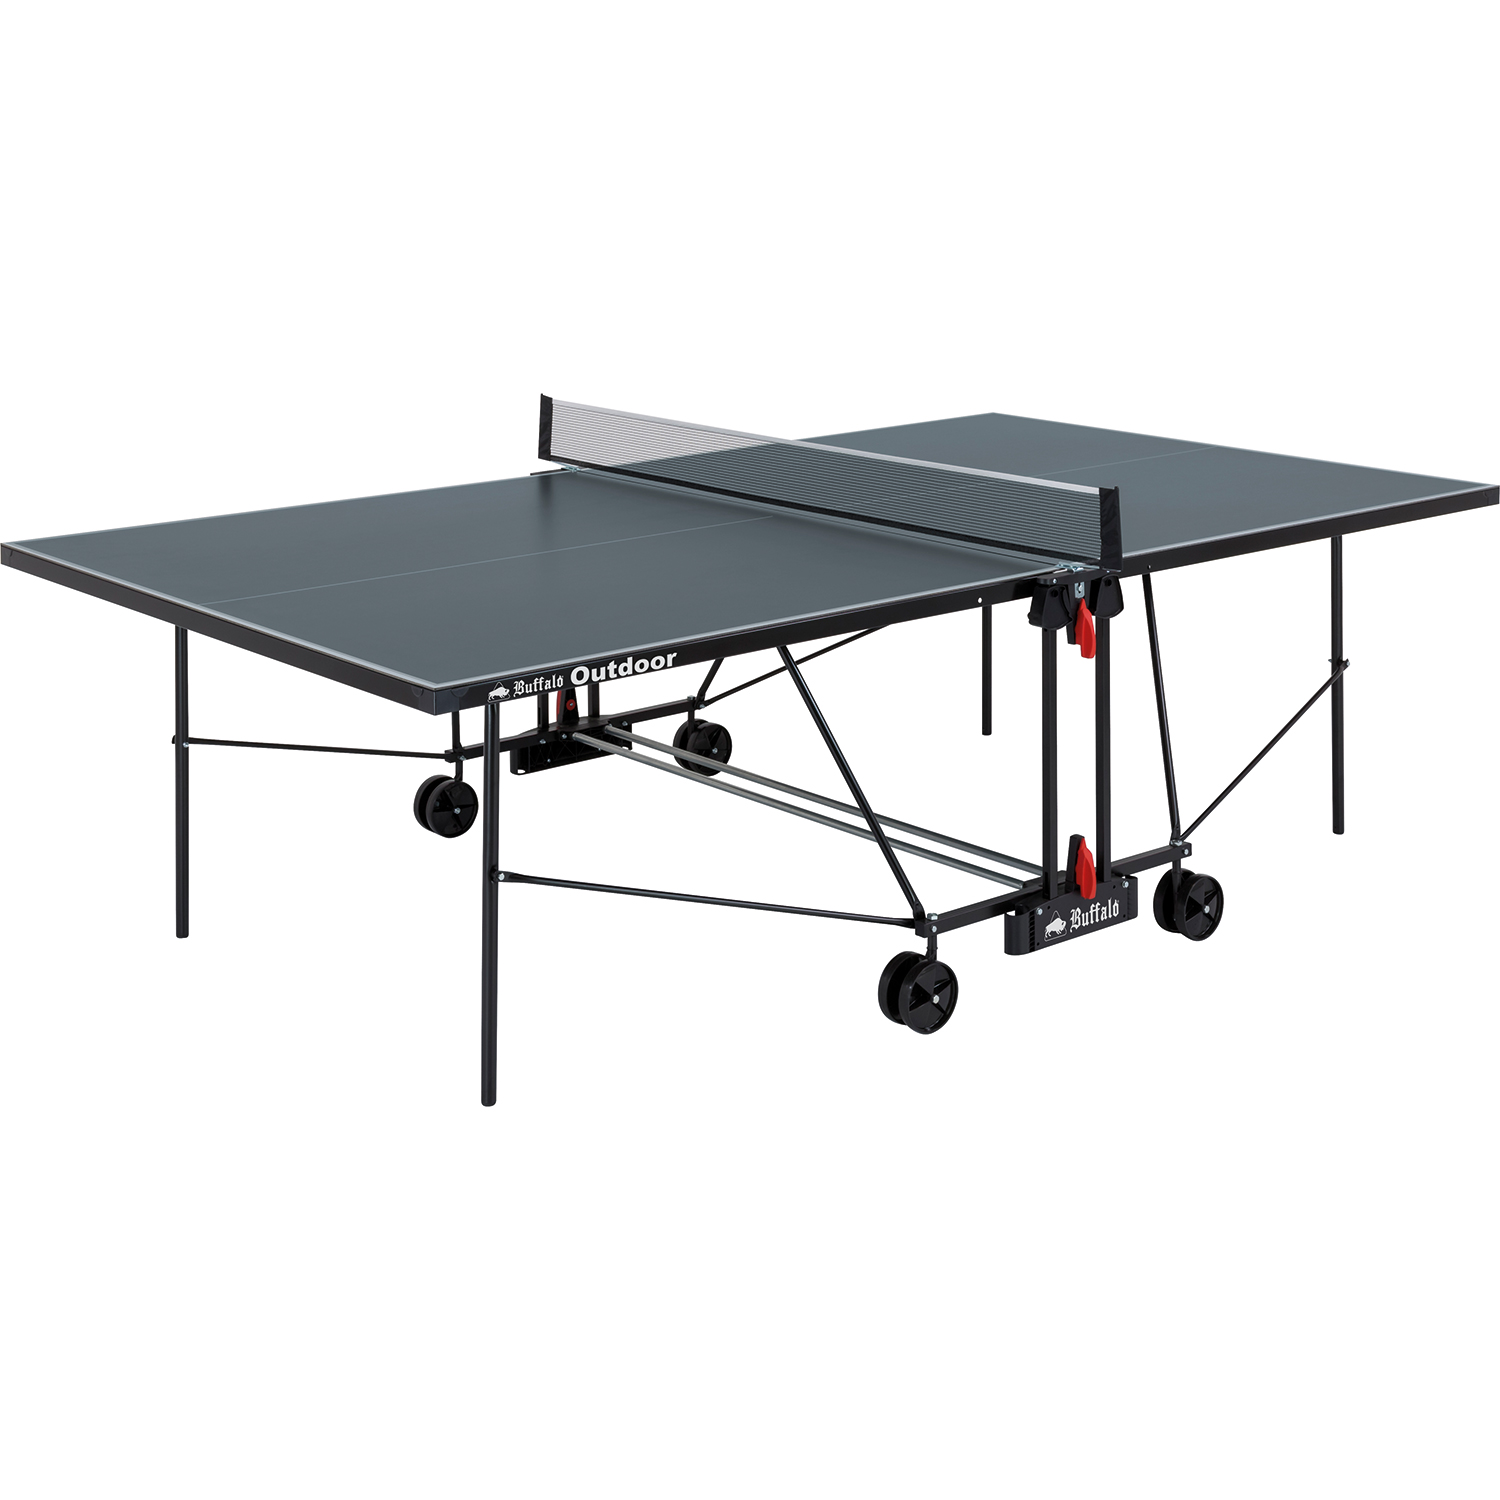 Buffalo Basic outdoor table tennis table grey